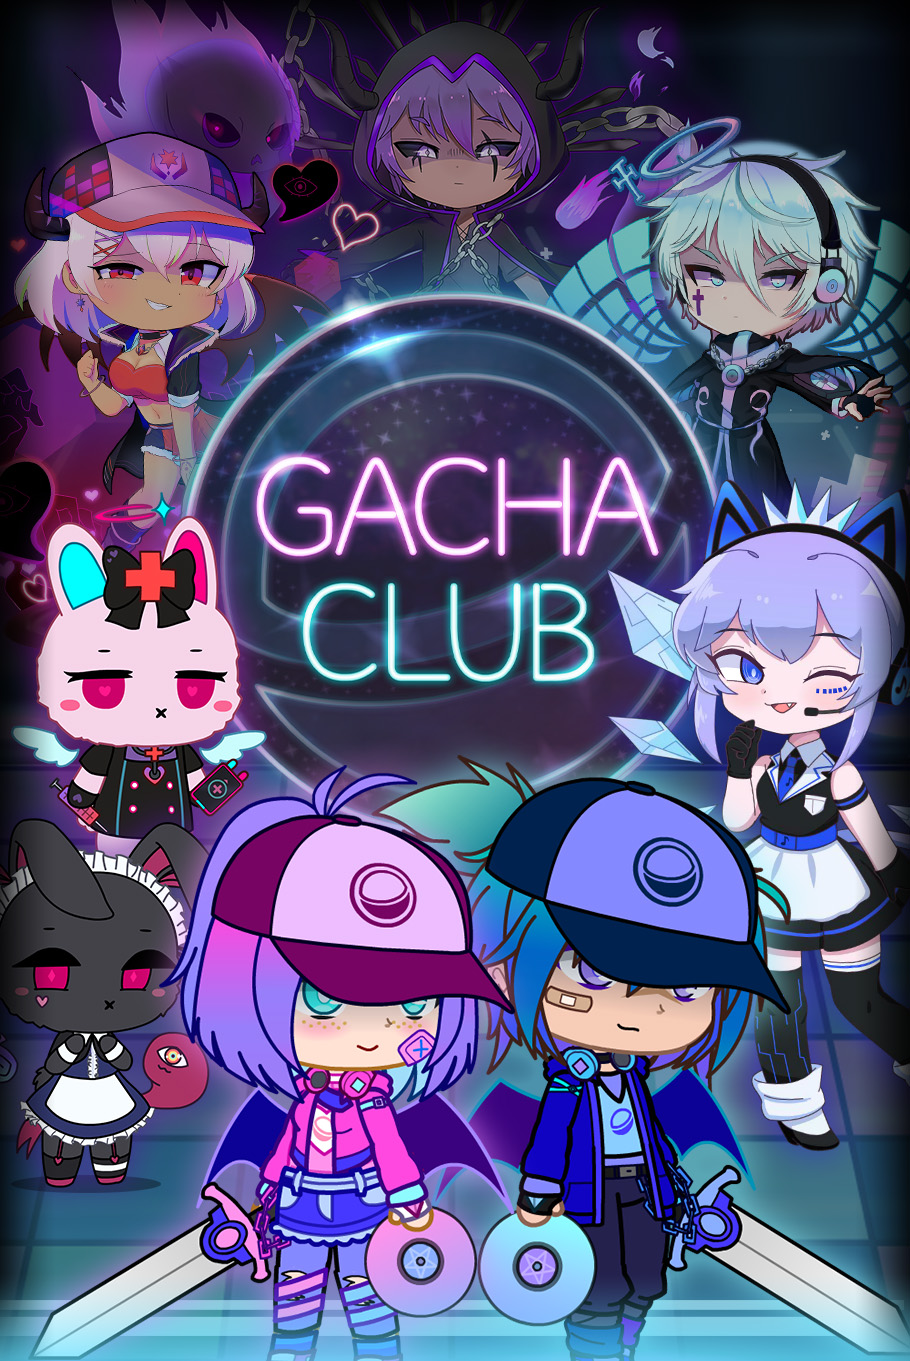 Gacha Club Available Now On iOS! by LunimeGames on DeviantArt